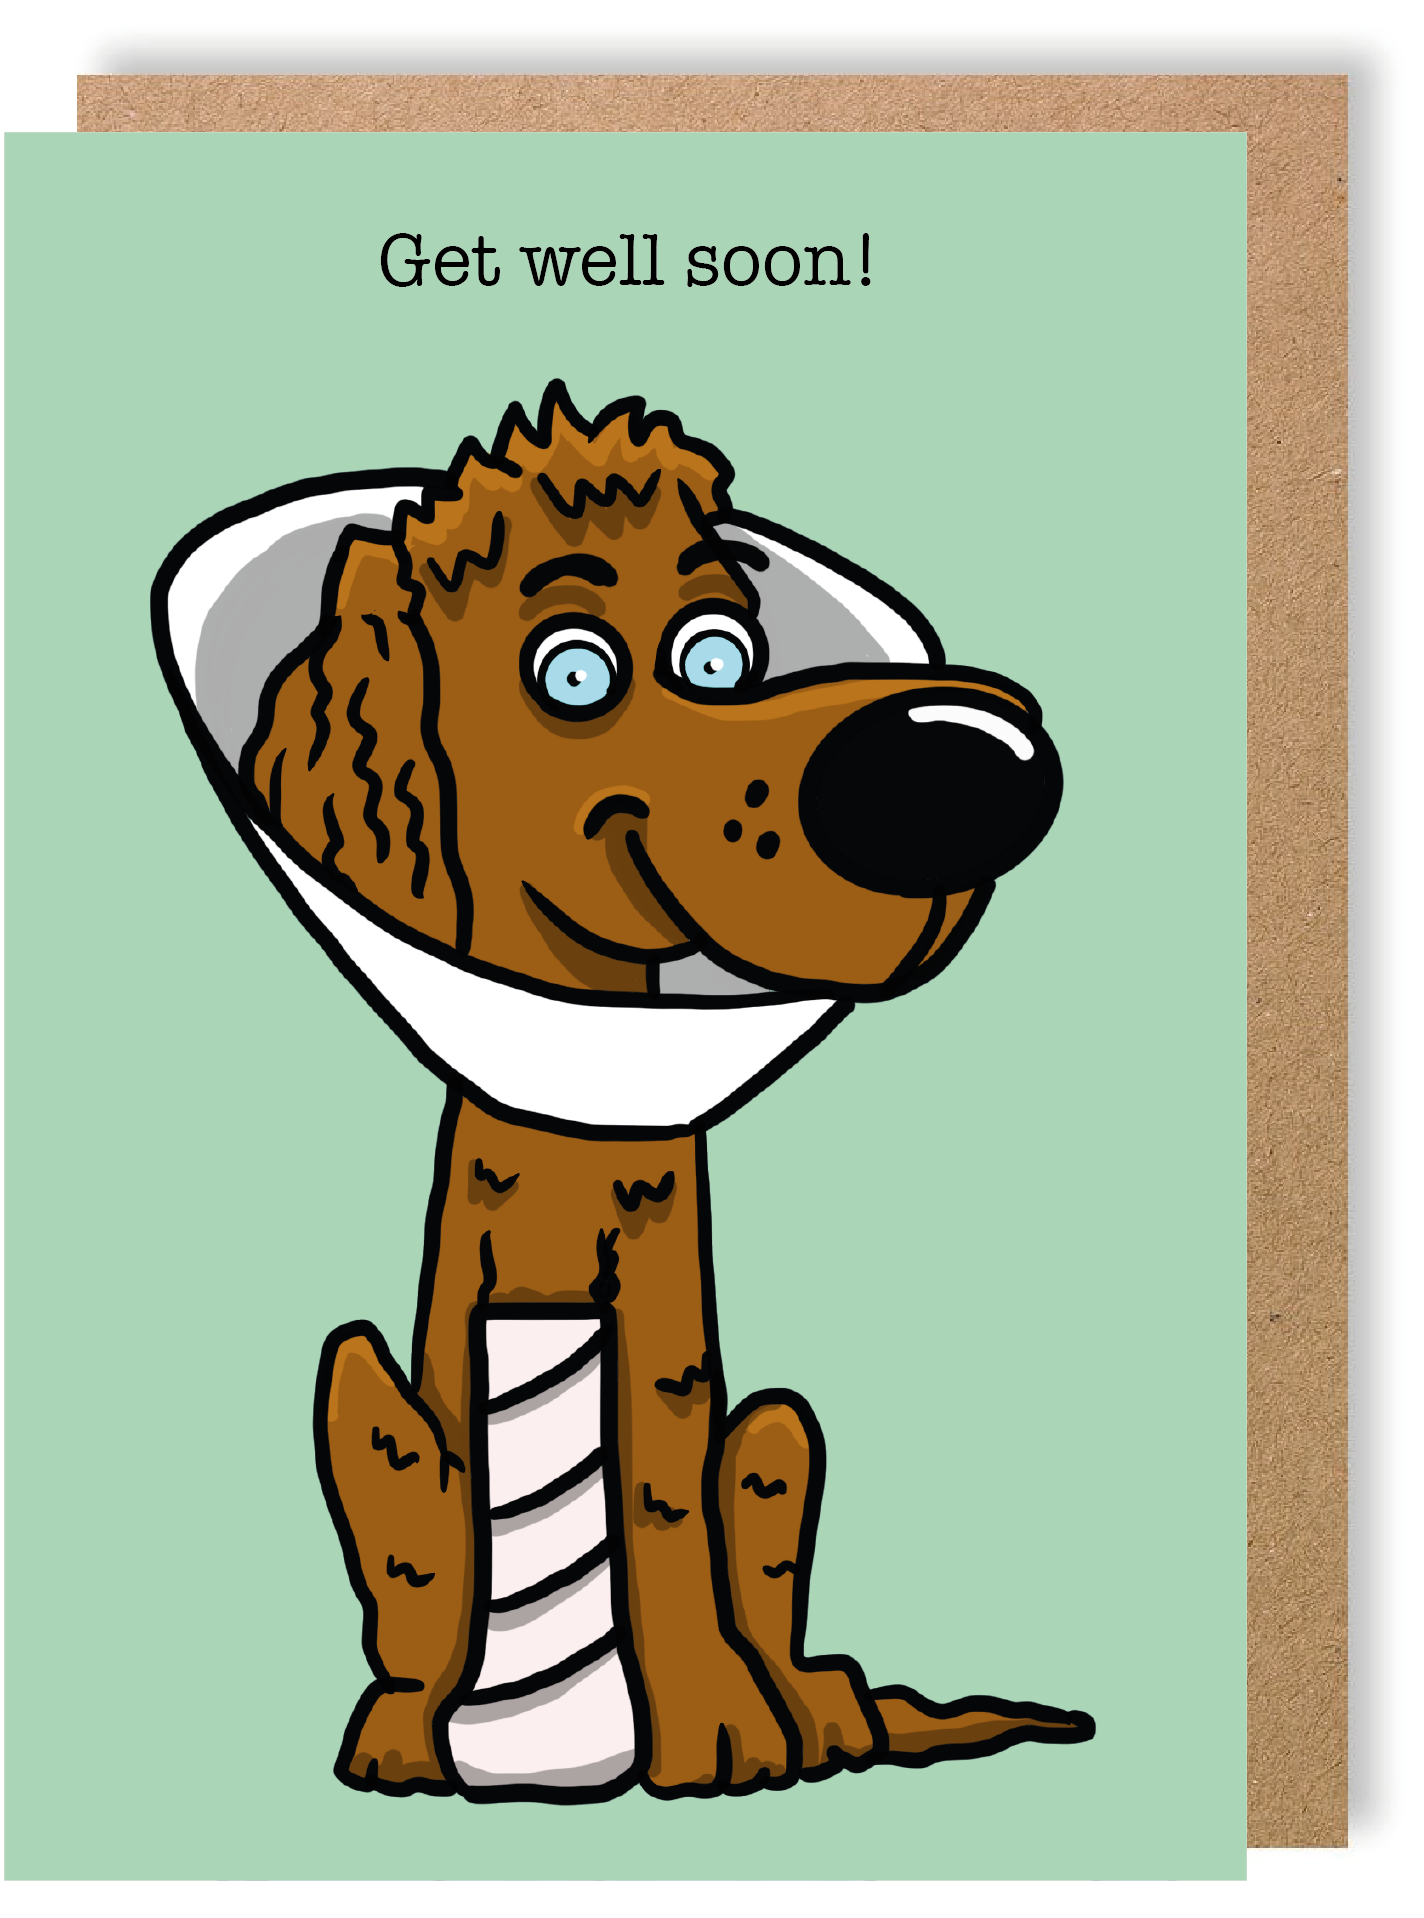 Get Well Soon! - Dog - Greetings Card - LukeHorton Art